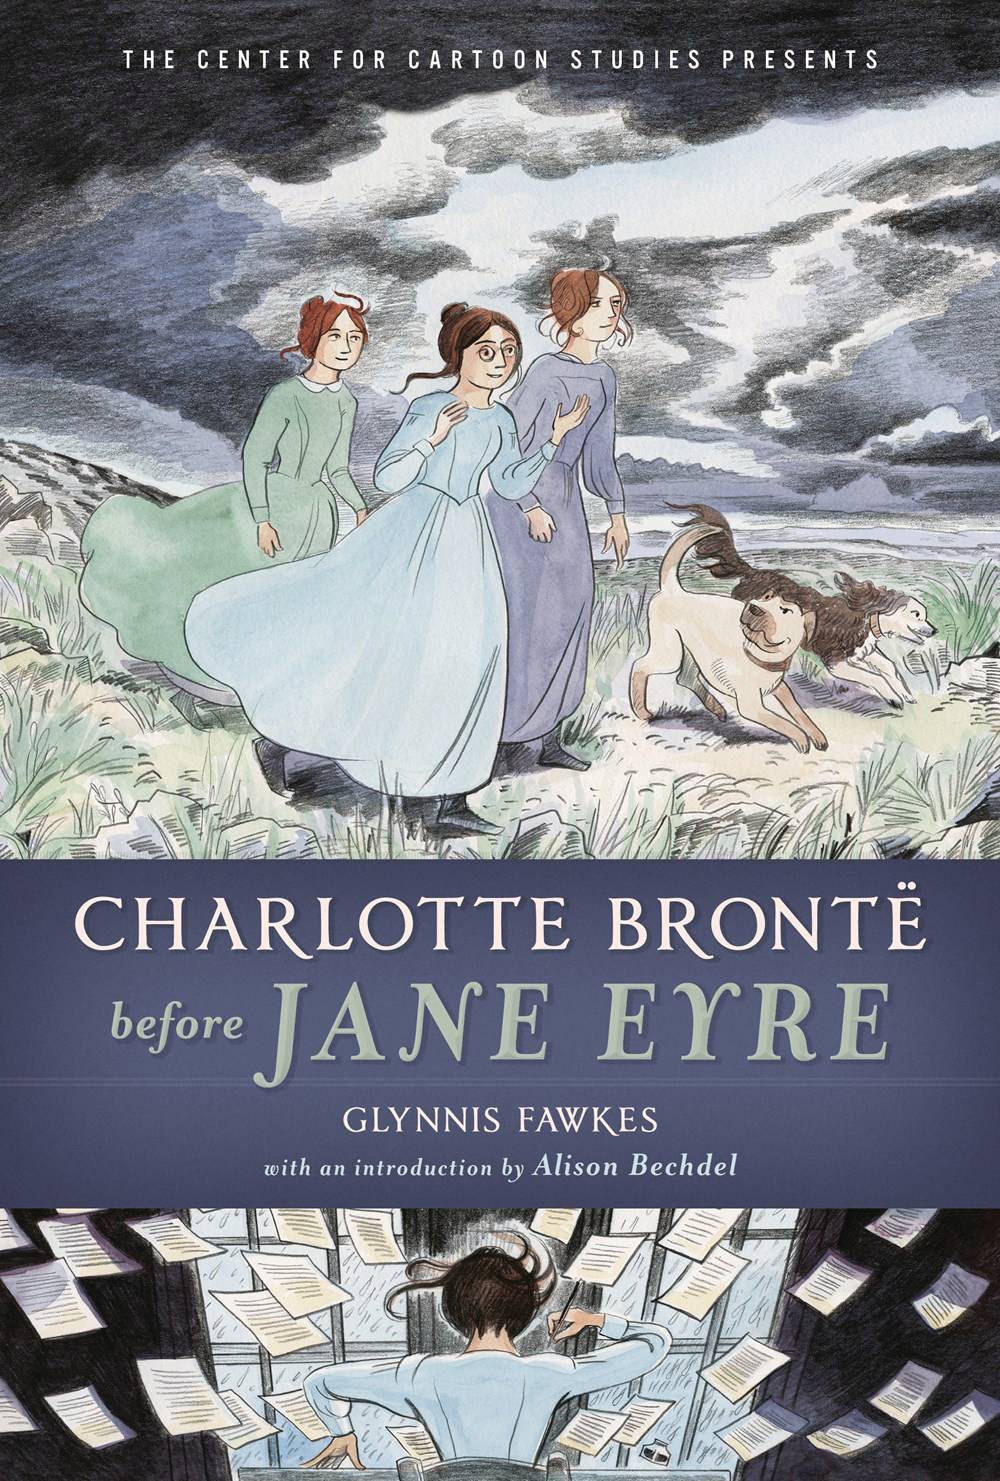 jane eyre novel by charlotte bronte